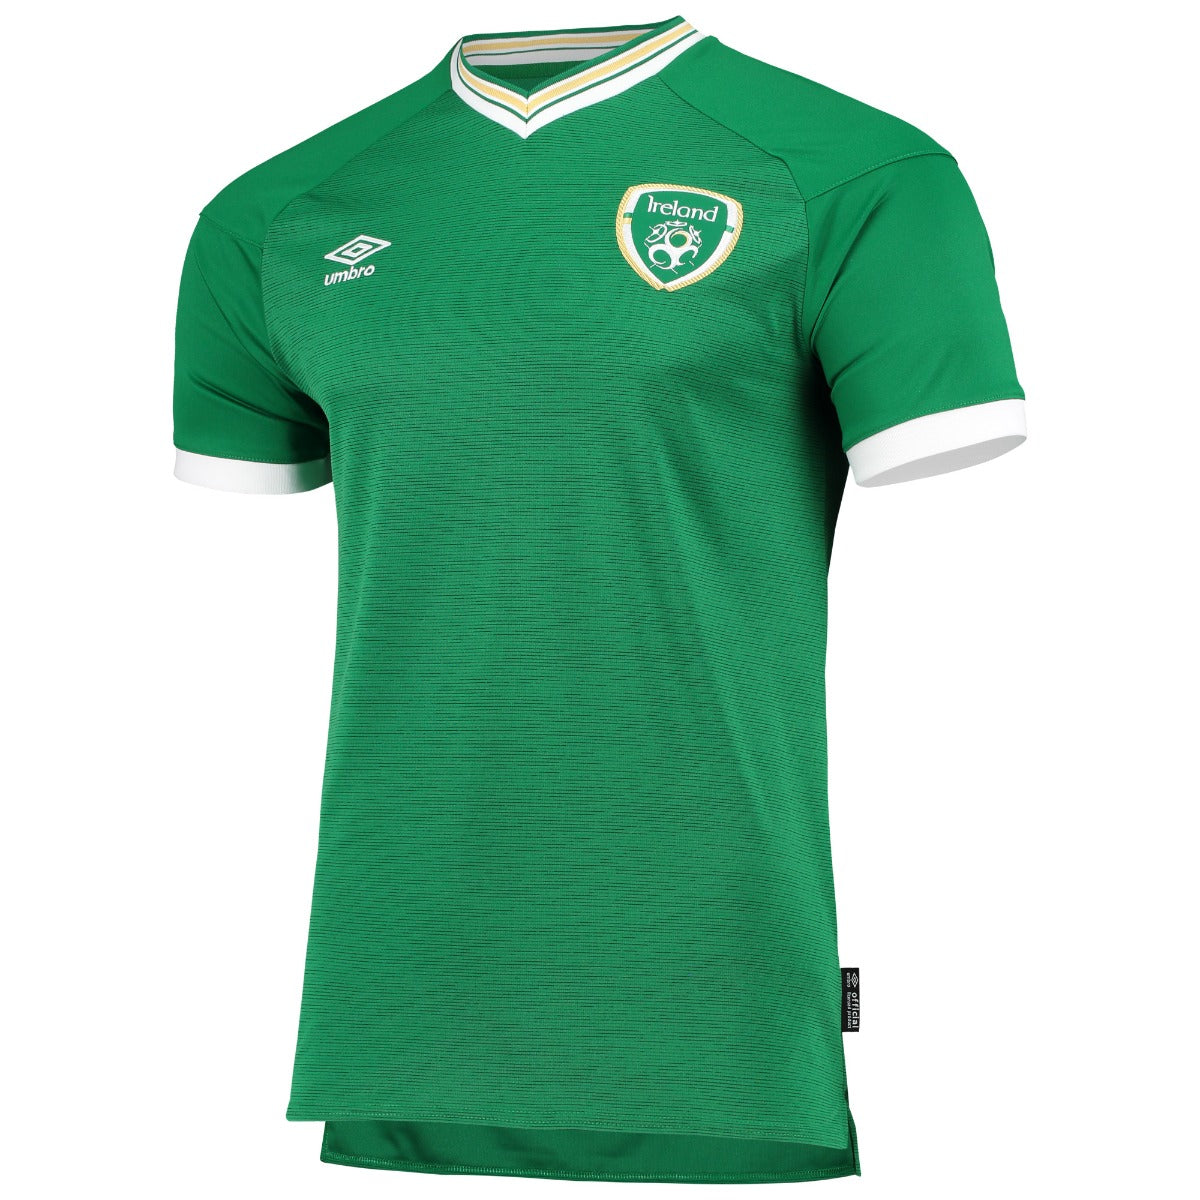 Umbro 2020-21 Ireland Home Jersey - Green (Front)